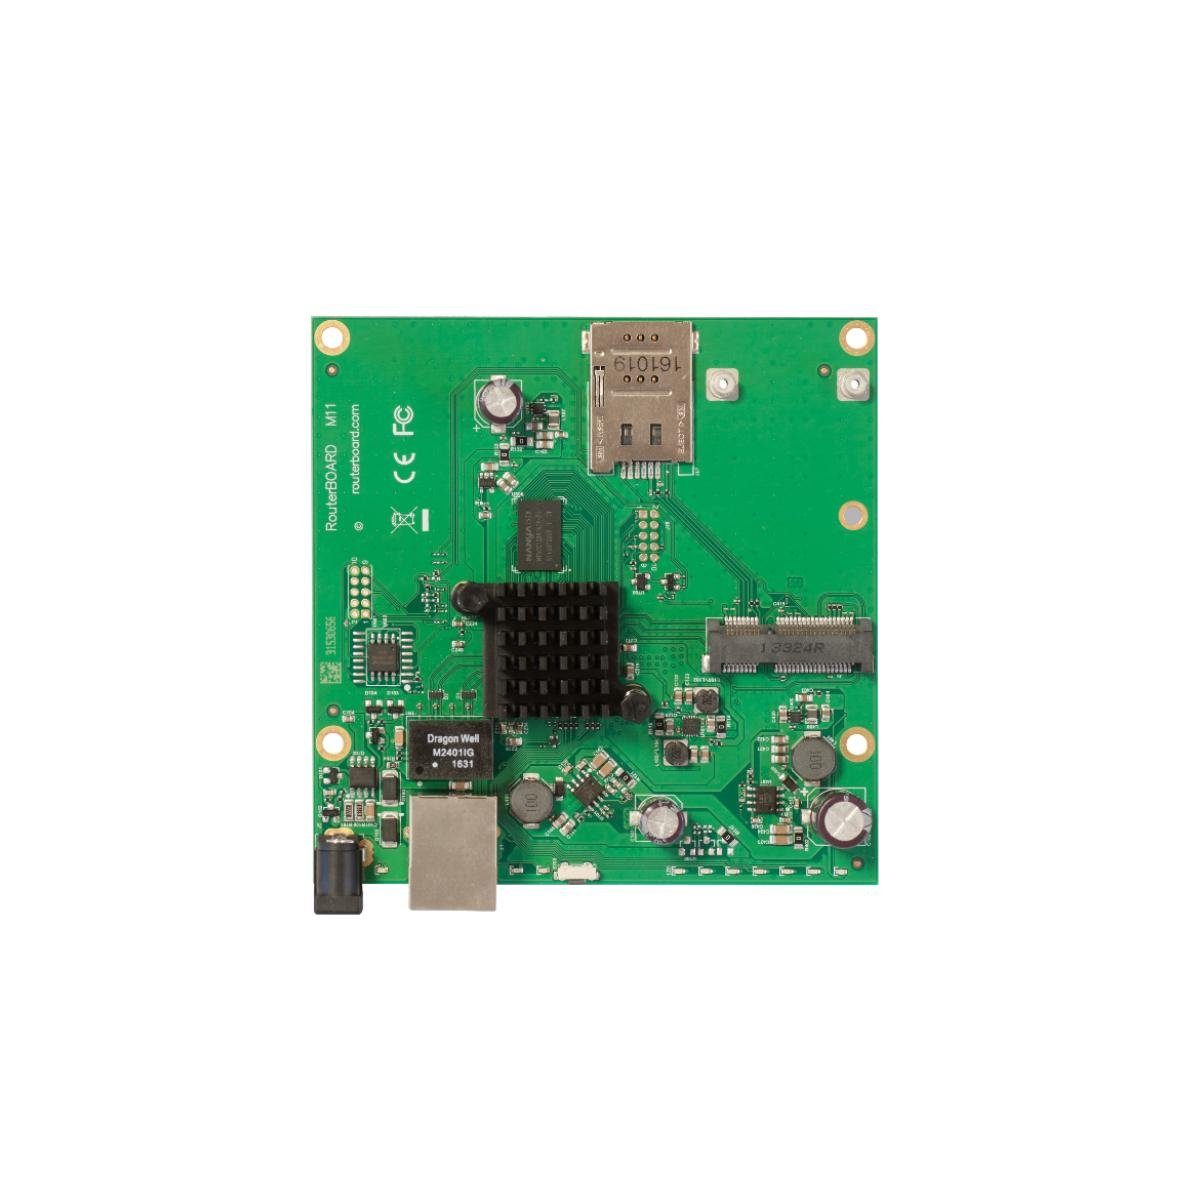 MB Core RBM11G CPU, RAM 256 - RouterBOARD MHz Dual M11G MikroTik Netzwerk-Switch mit 880